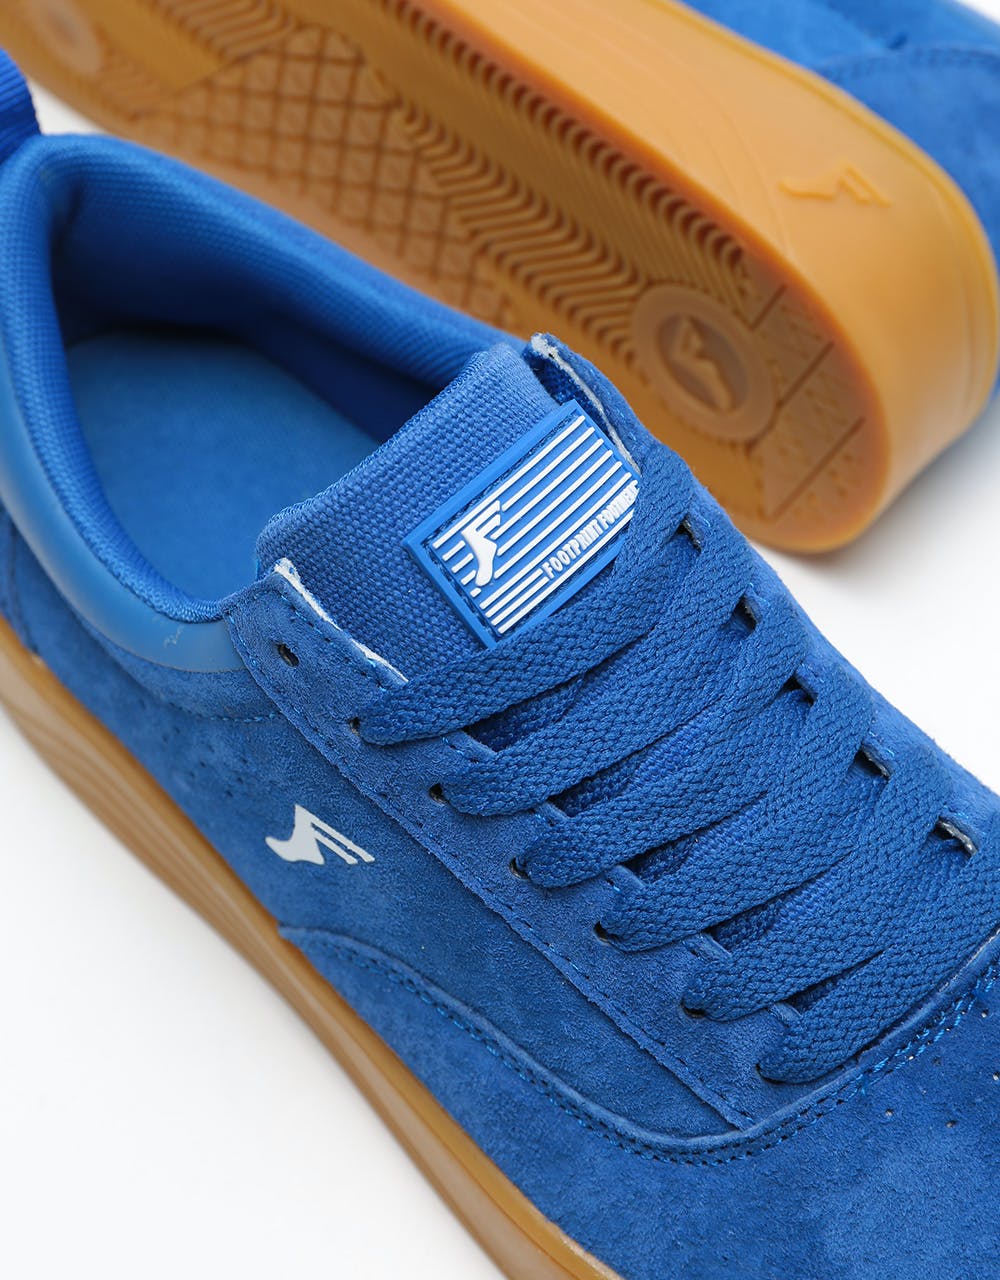 Footprint Intercept Skate Shoes - Navy Blue